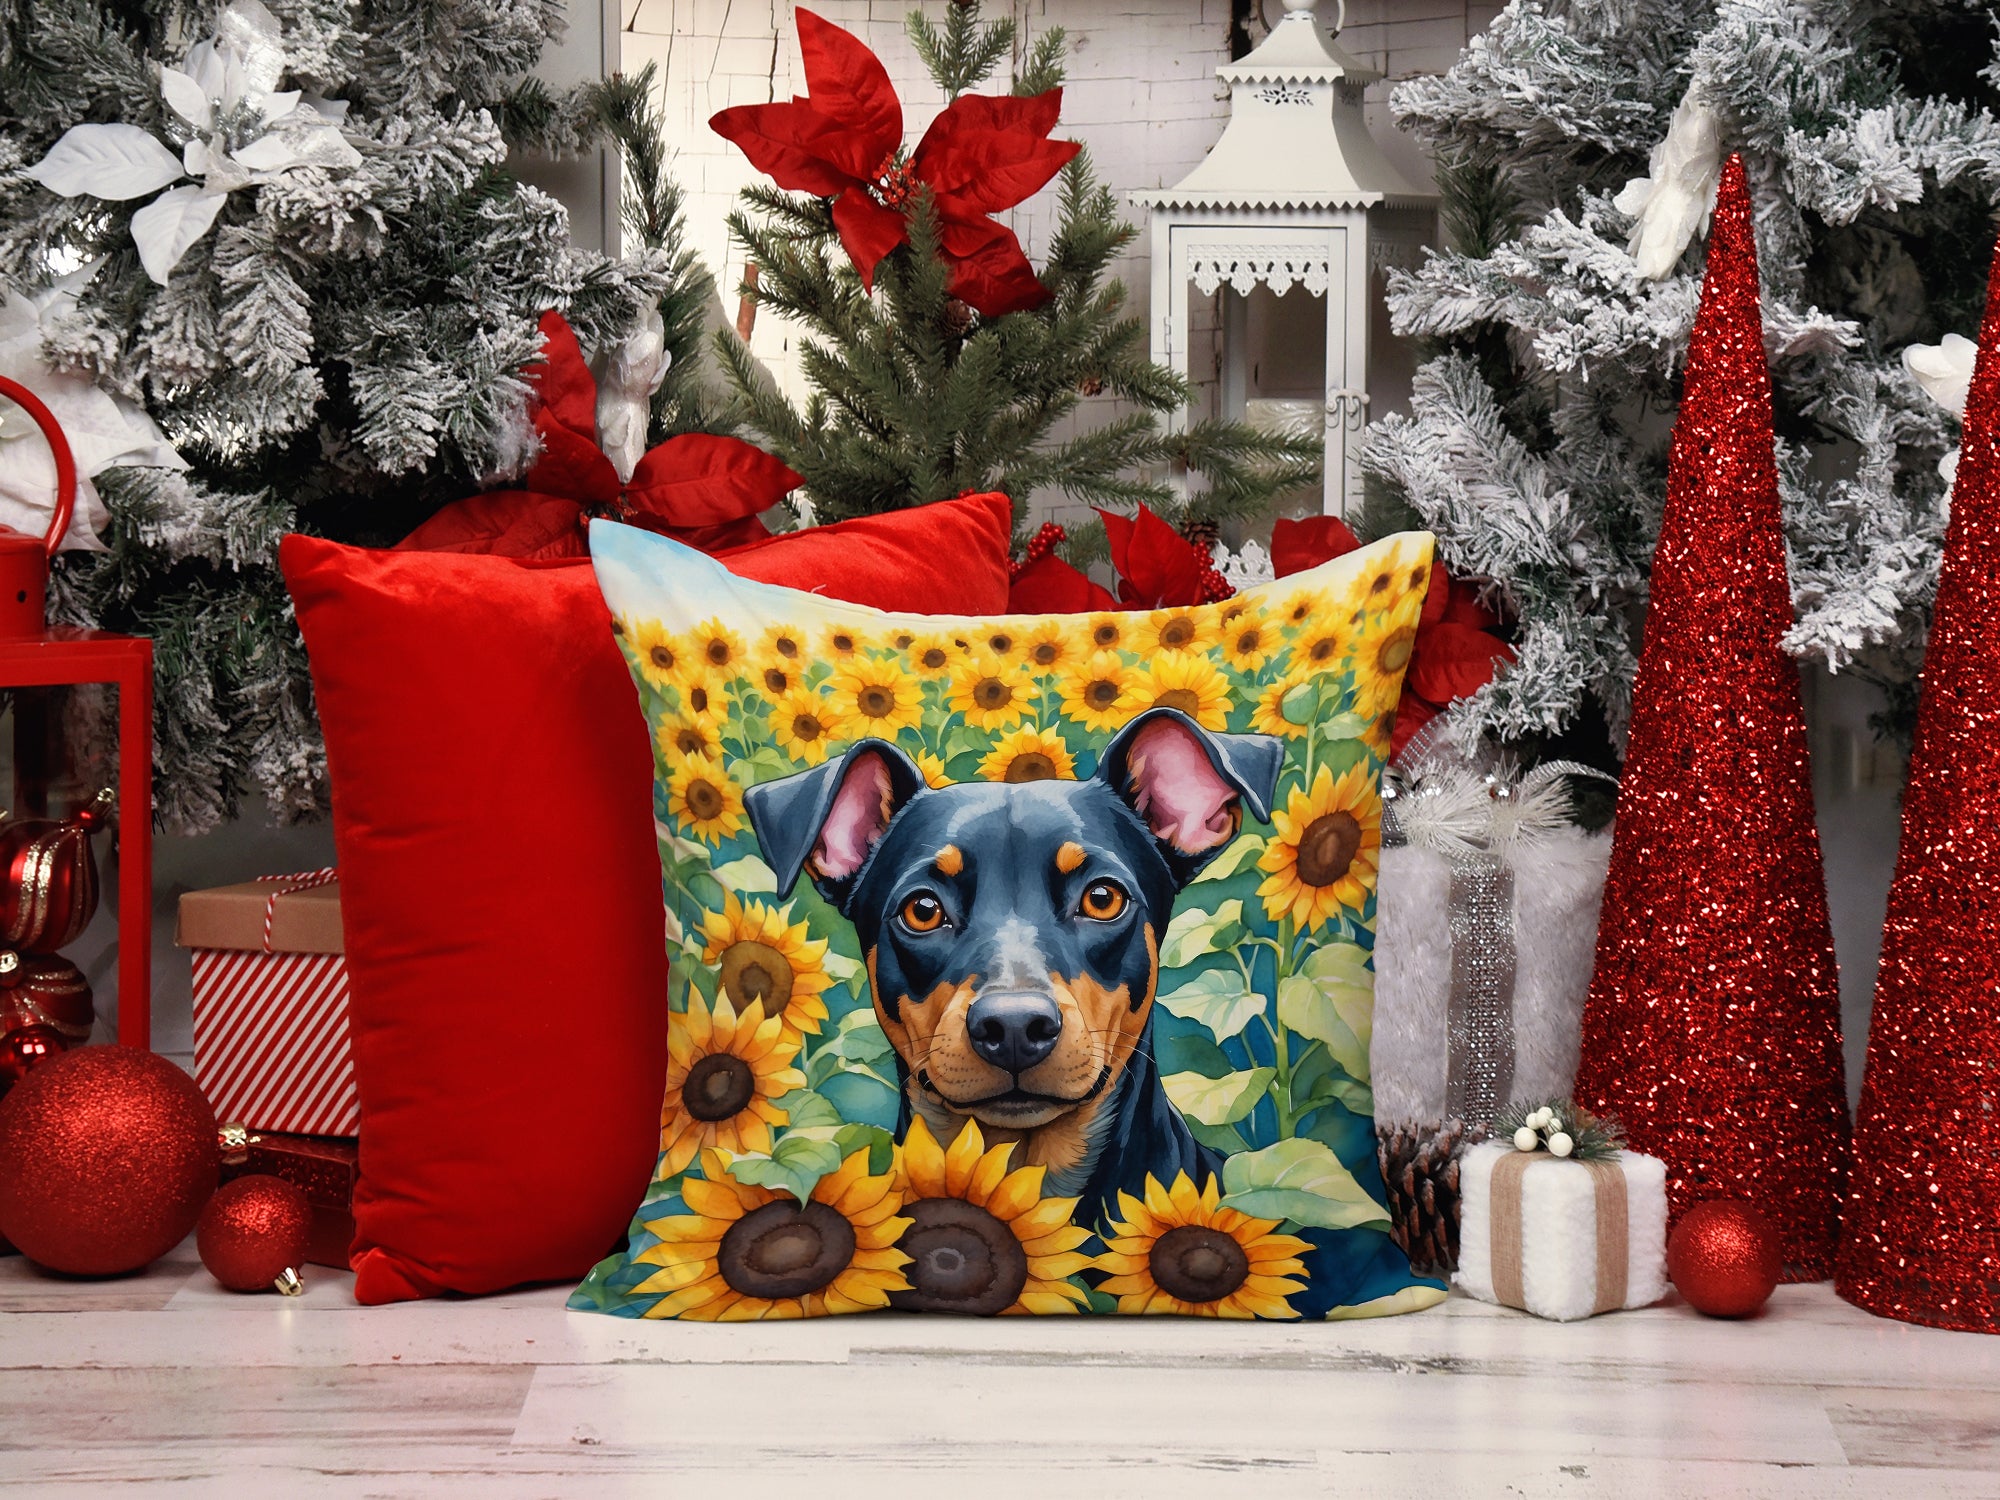 Manchester Terrier in Sunflowers Throw Pillow